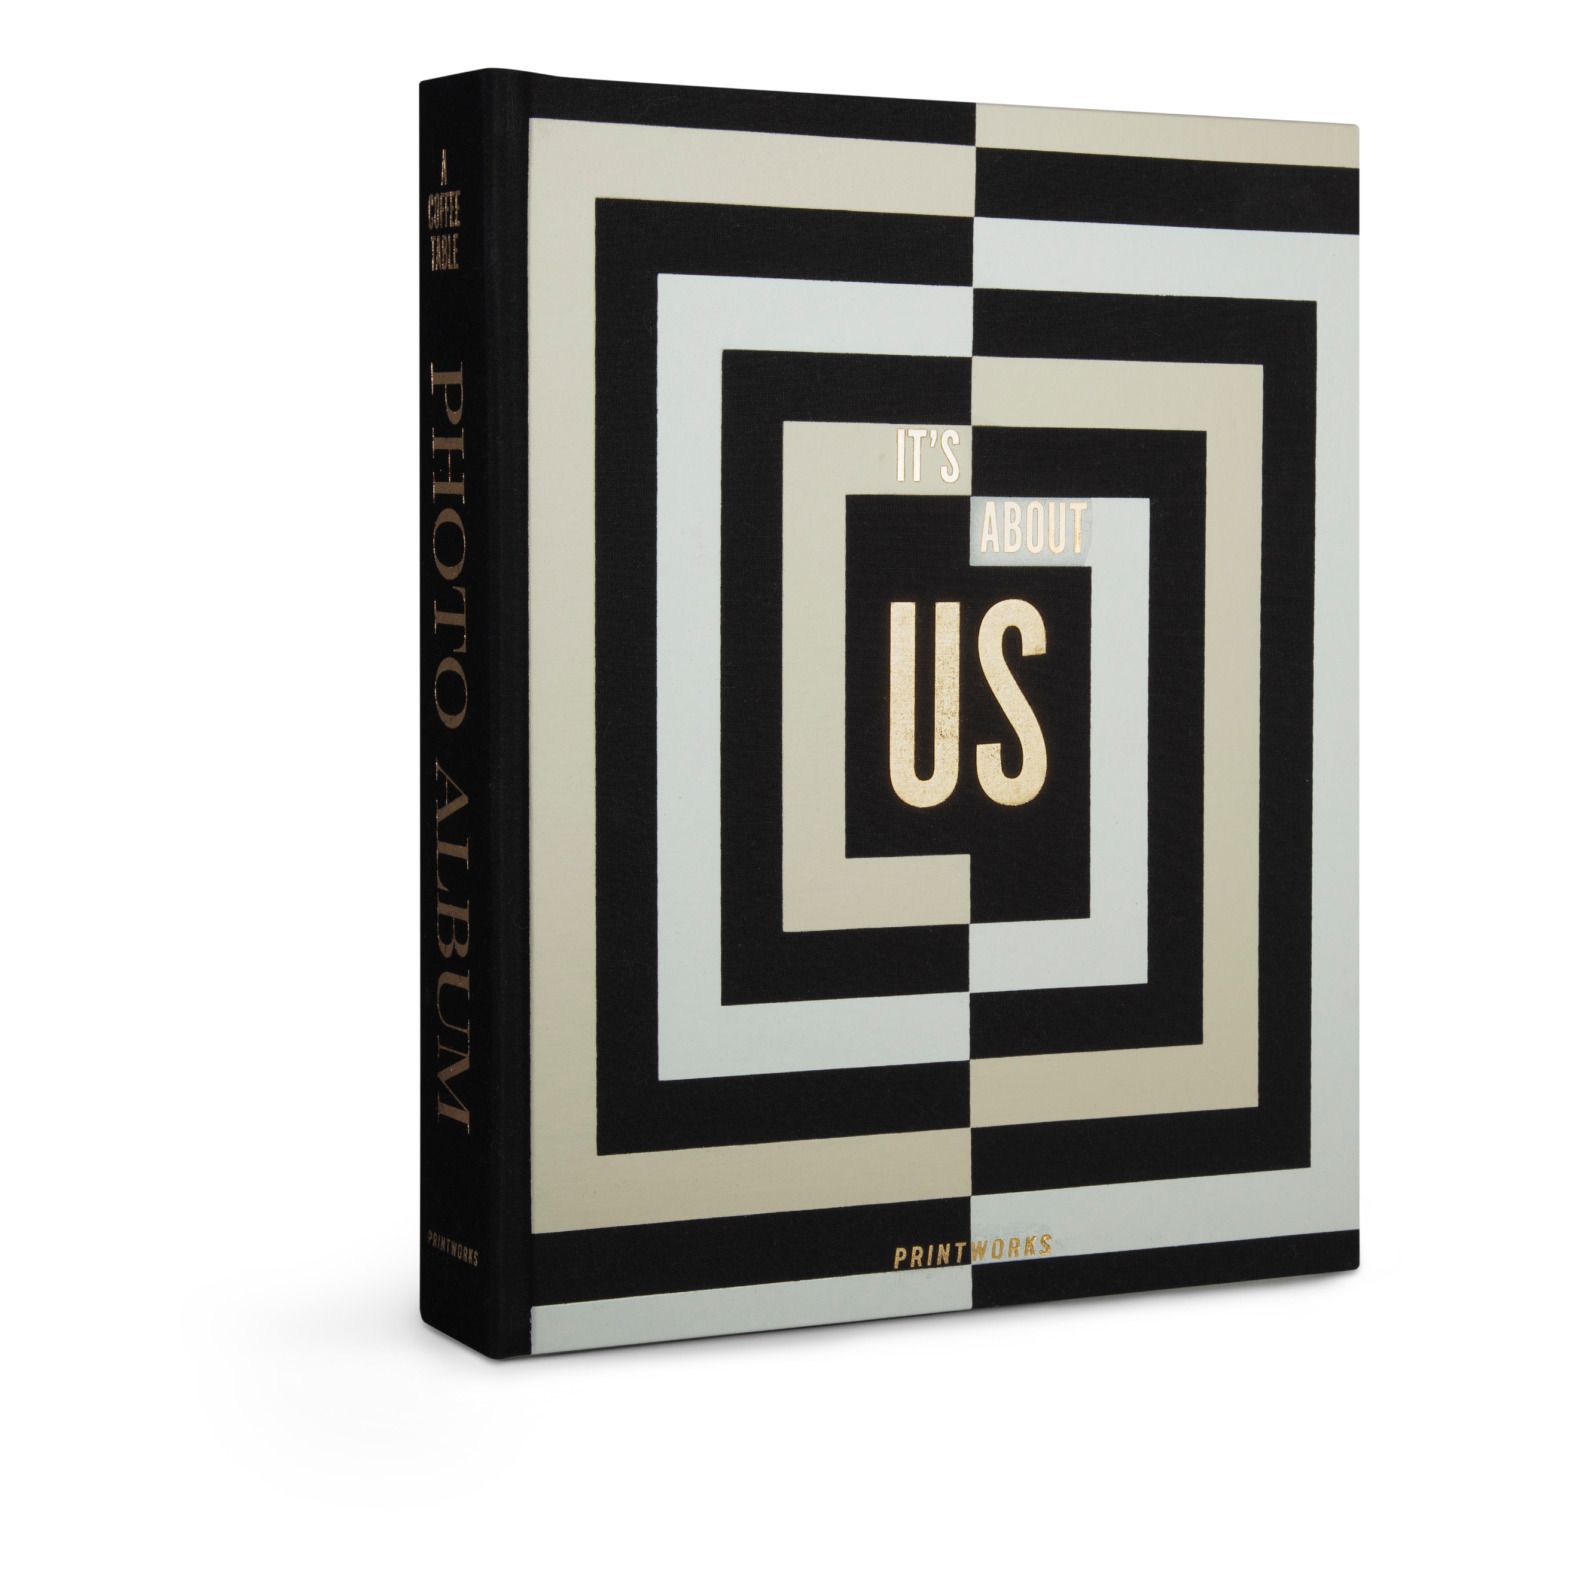 Album Photo - It's about us (PrintWorks) - Couverture